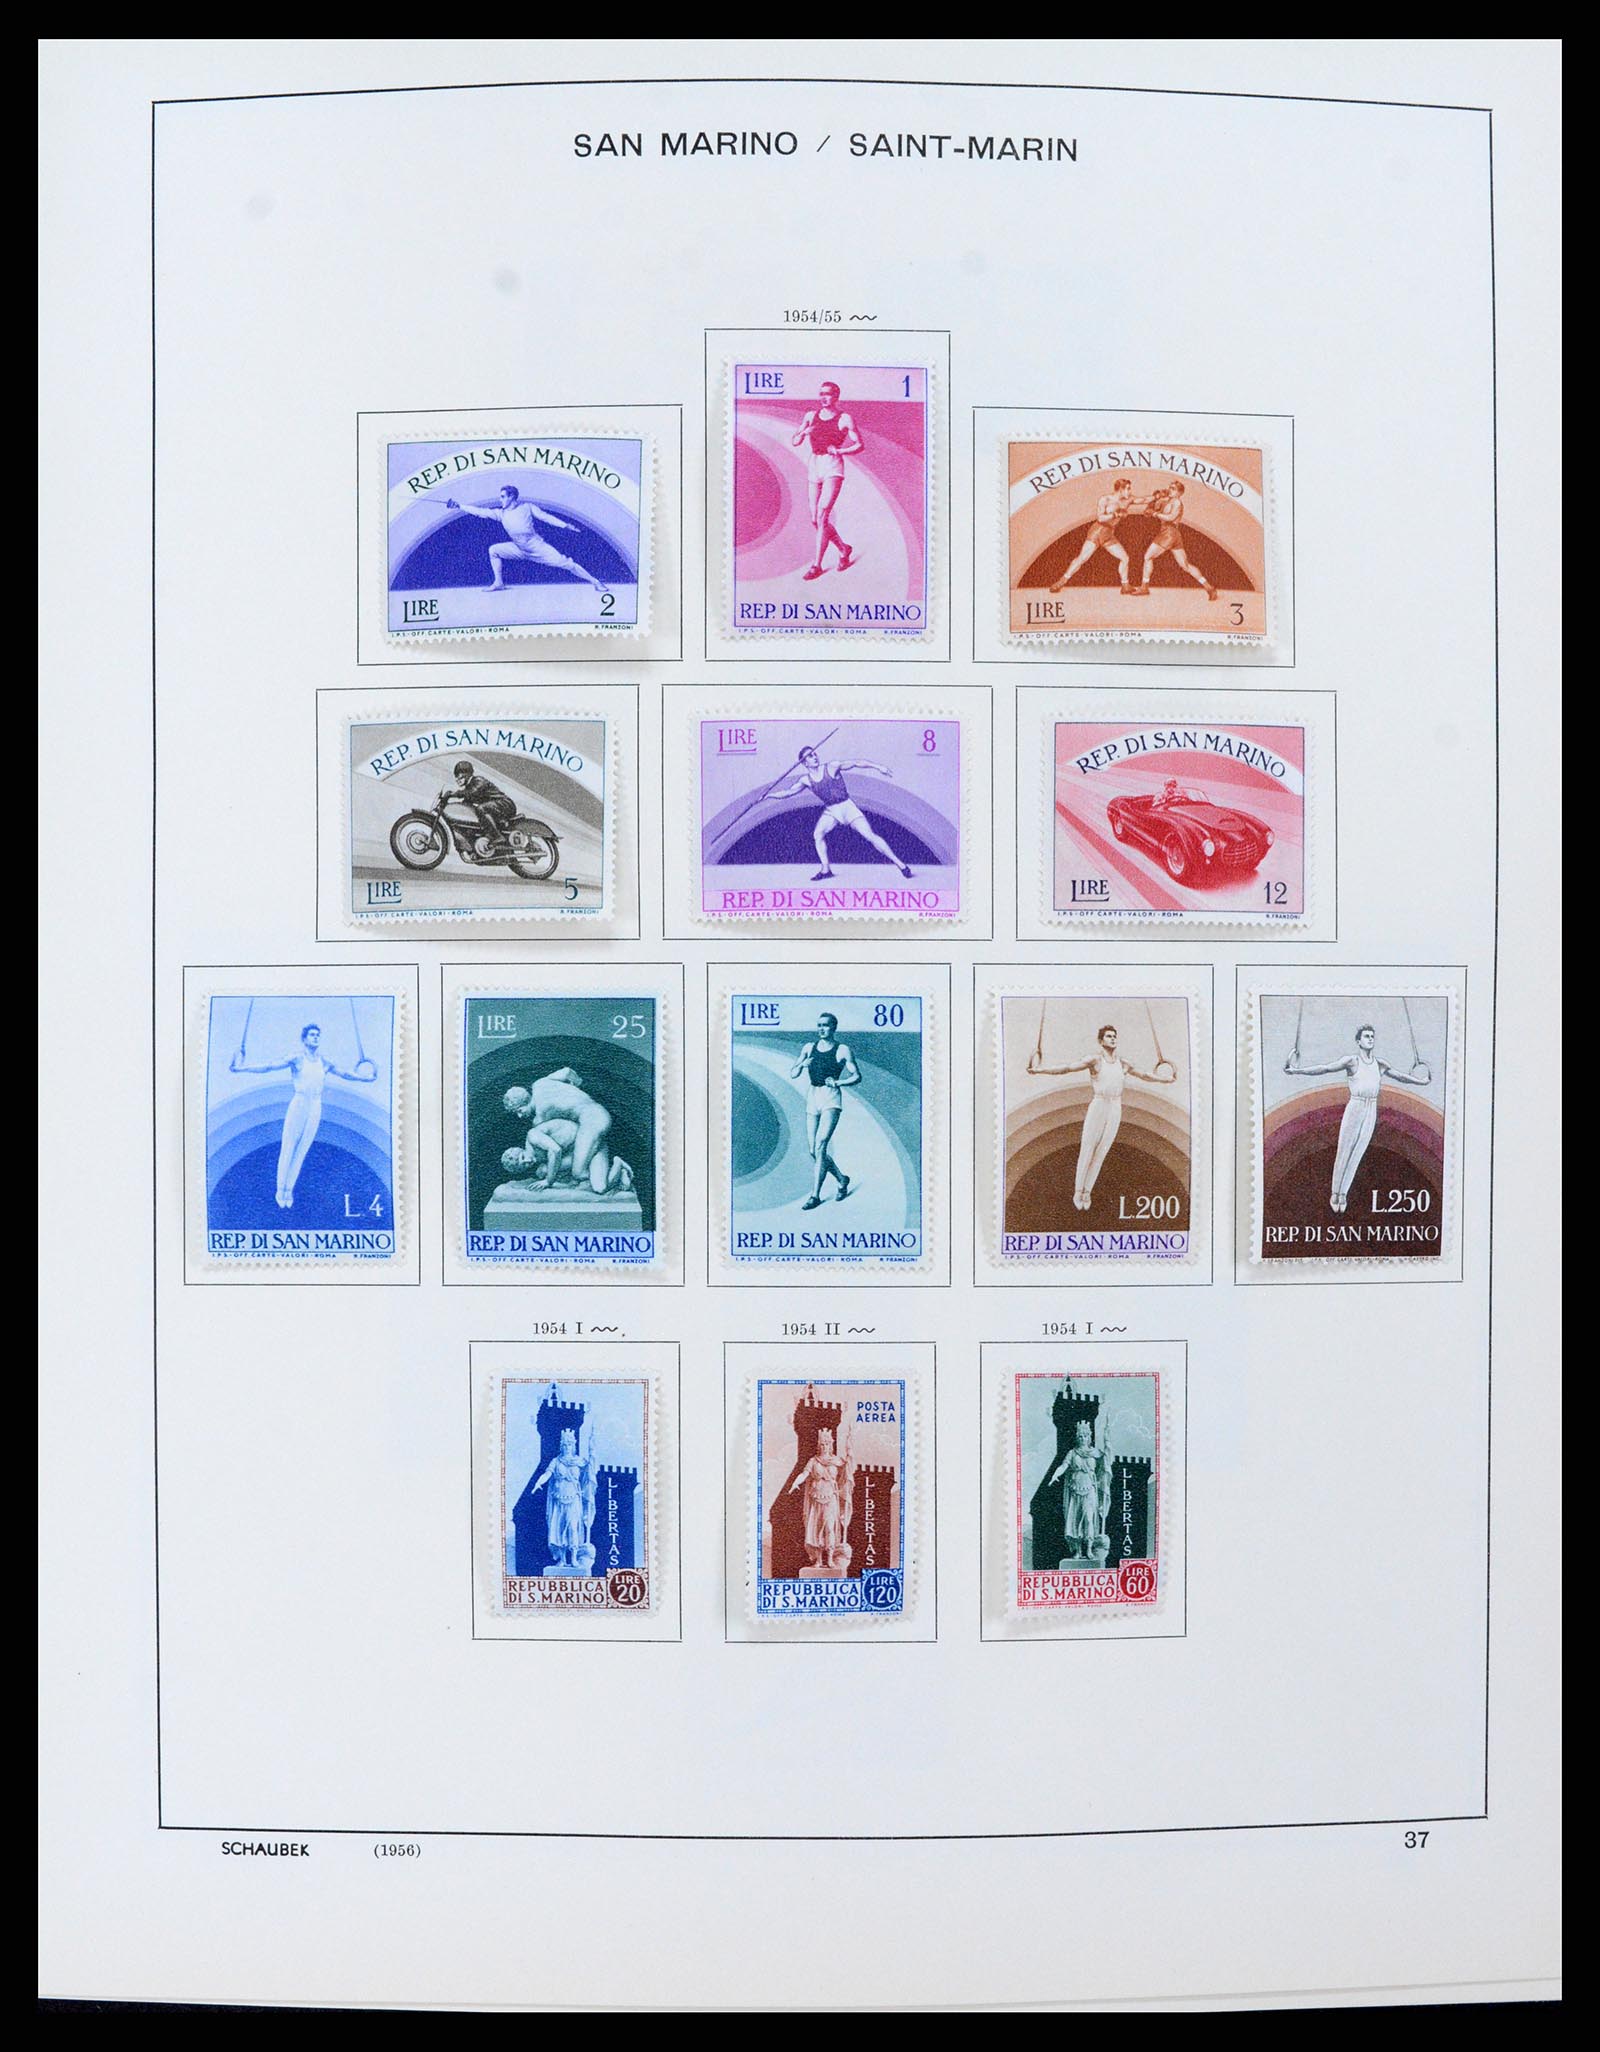 37556 037 - Stamp collection 37556 San Marino 1877-2017.